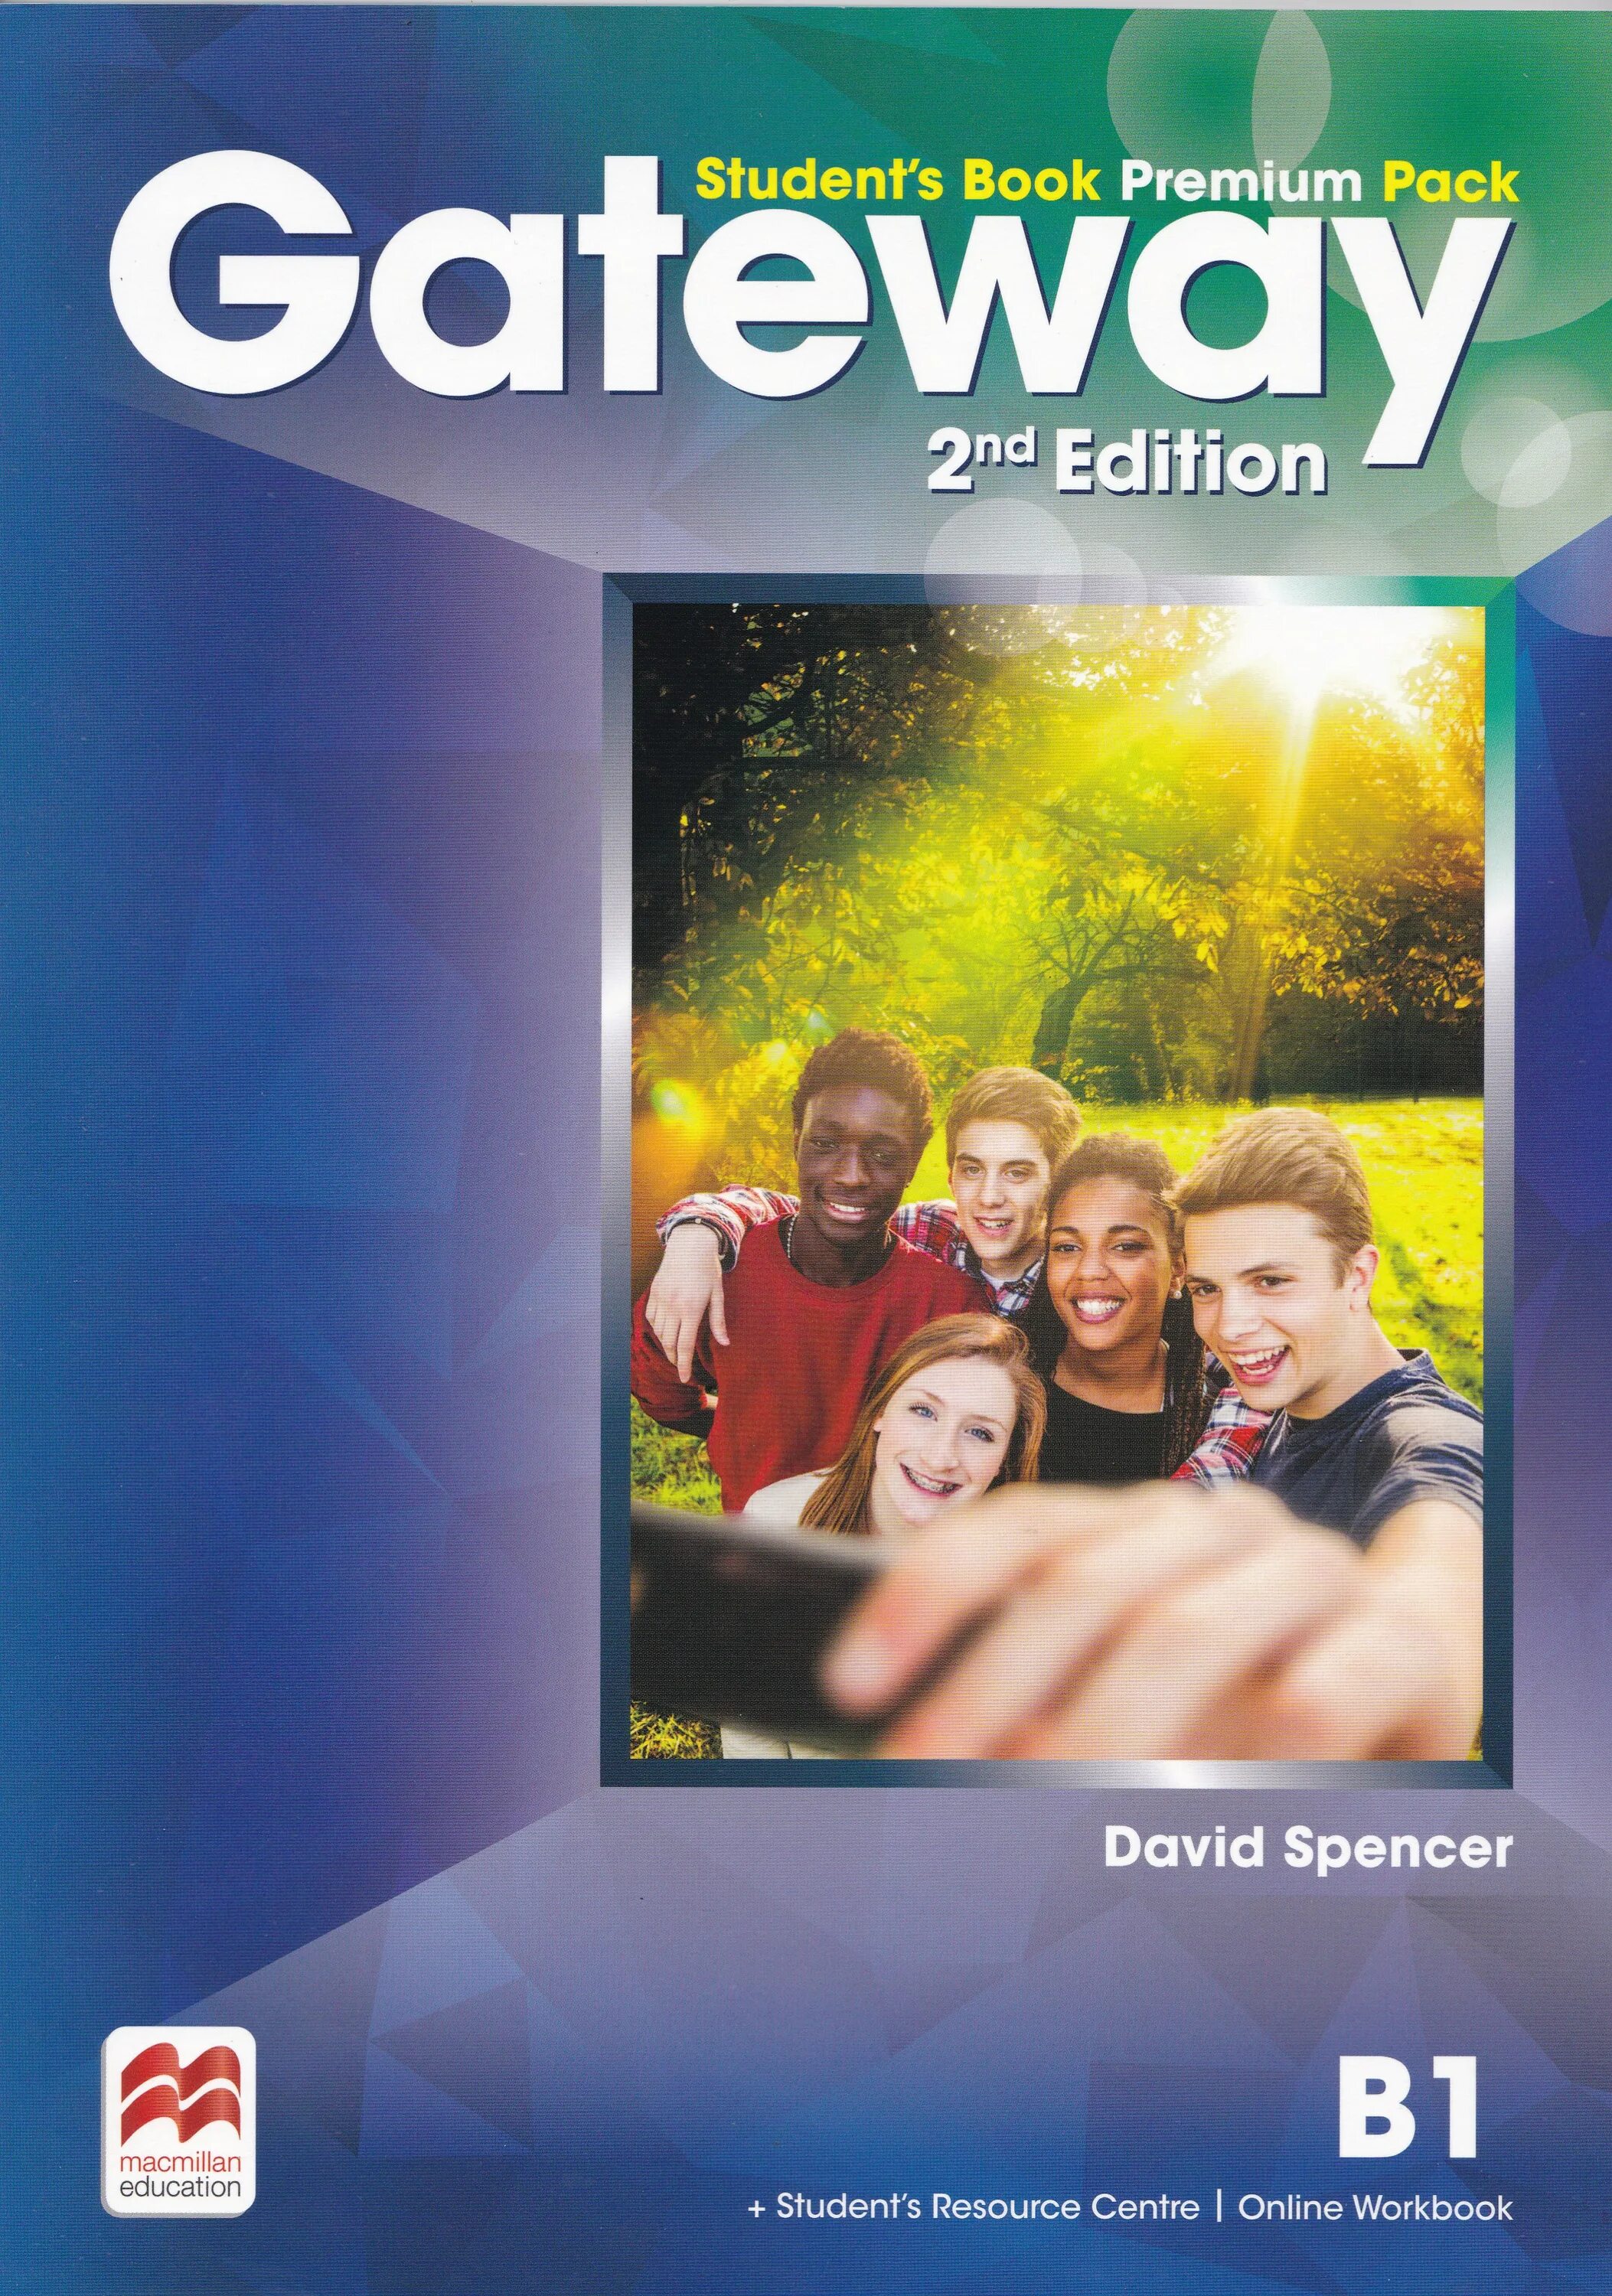 Student book workbook. Gateway b1 2nd Edition. Gateway b1 student's book. Gateway b1 student's book 2nd Edition Workbook. Gateway (2nd Edition) b1 student's book Premium Pack.